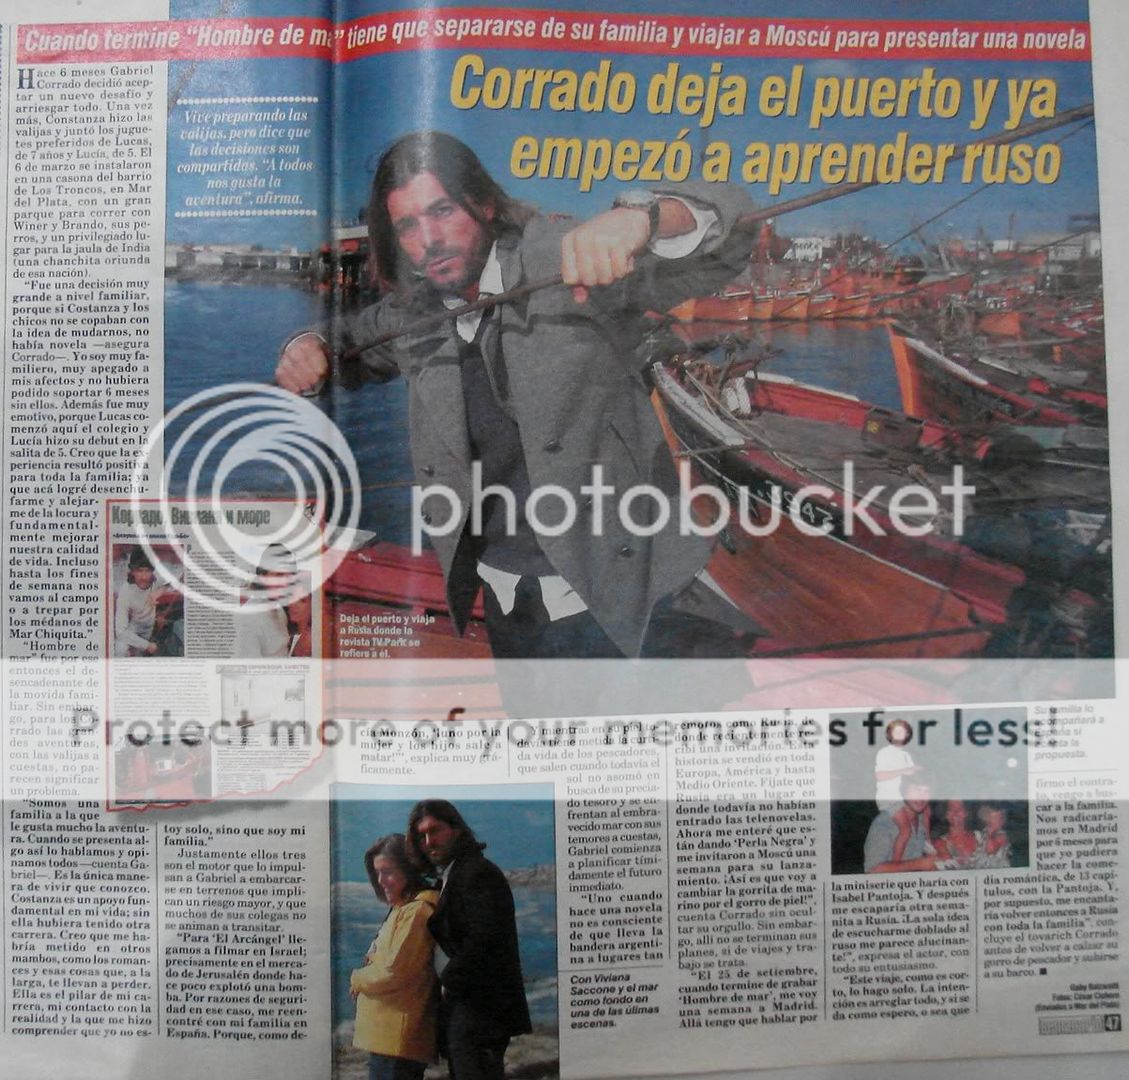 http://i27.photobucket.com/albums/c170/Nastya06/Gabriel%20Corrado/Sem950-GCorrHdemar-97.jpg